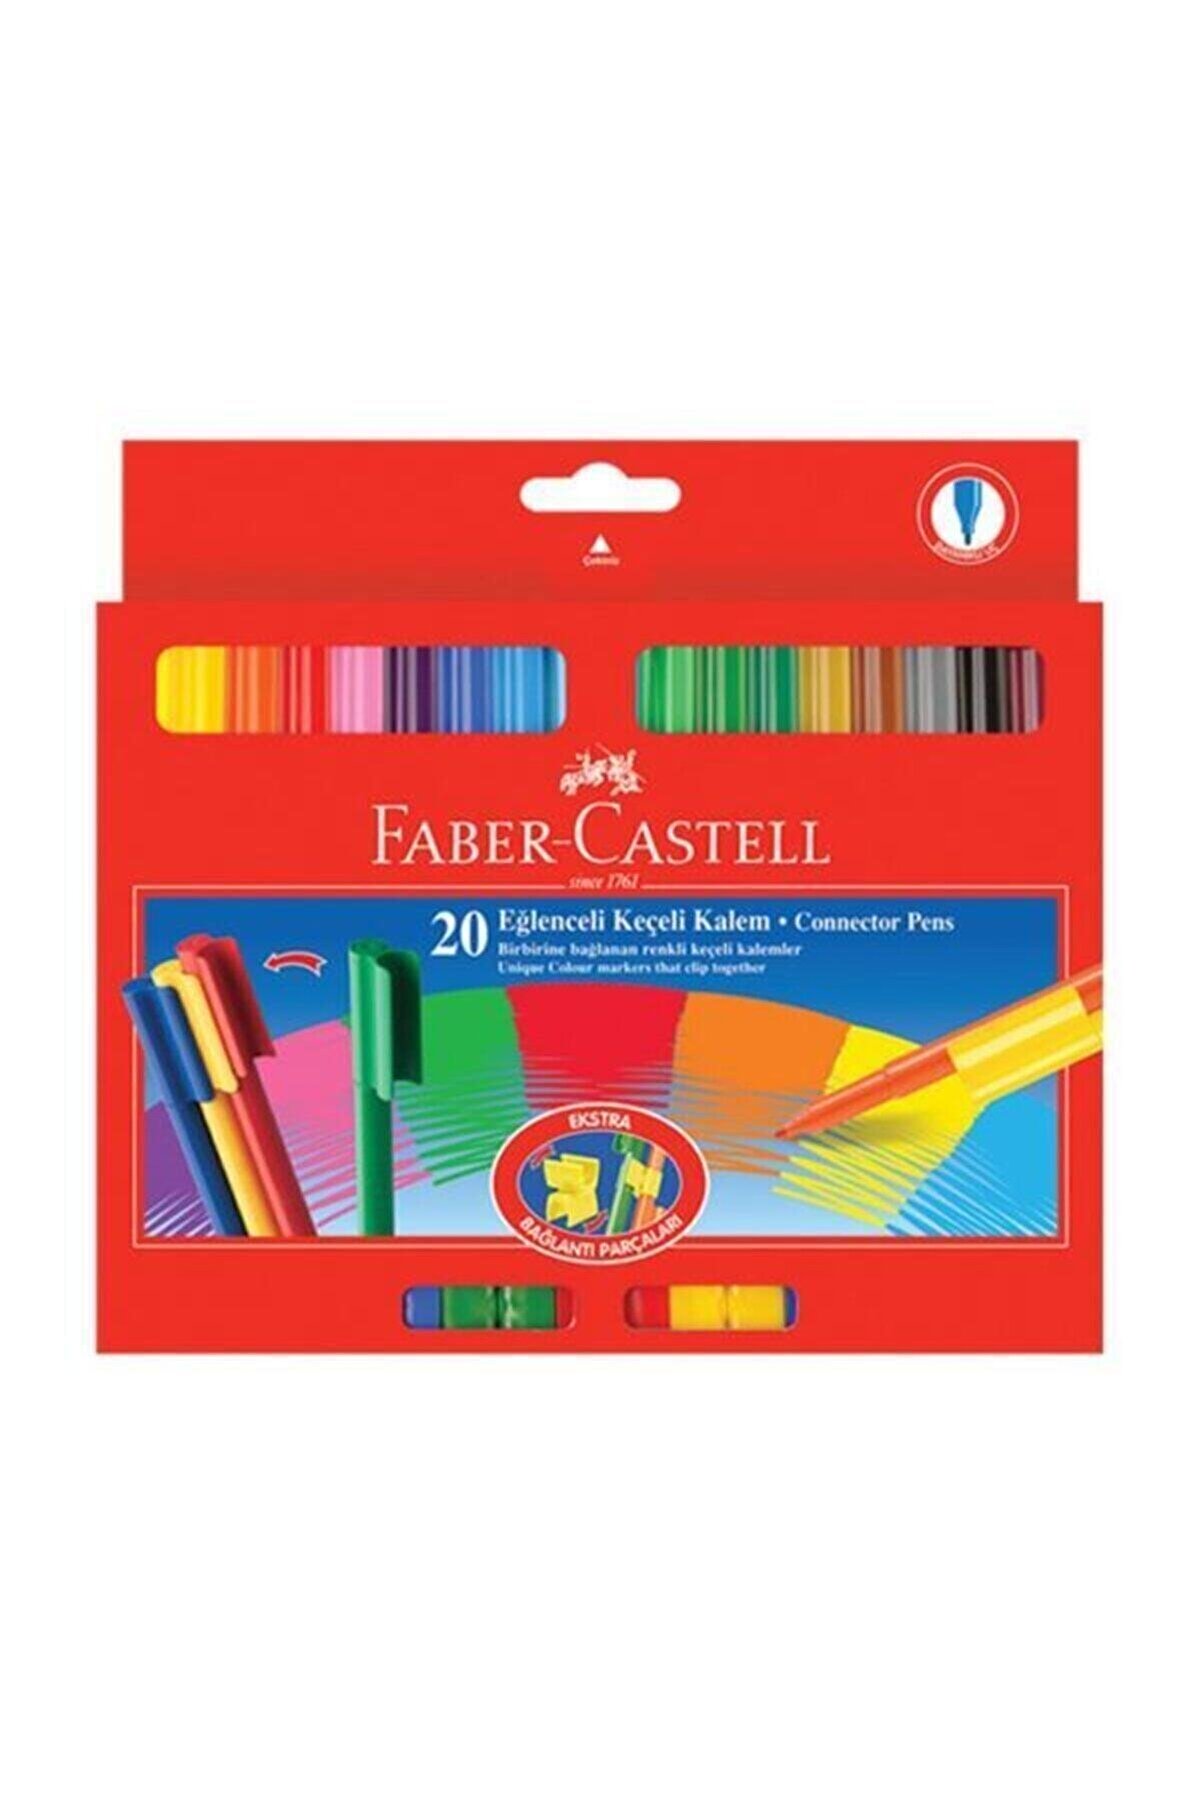 Faber Castell Eğlenceli Keçeli Kalem20 Li